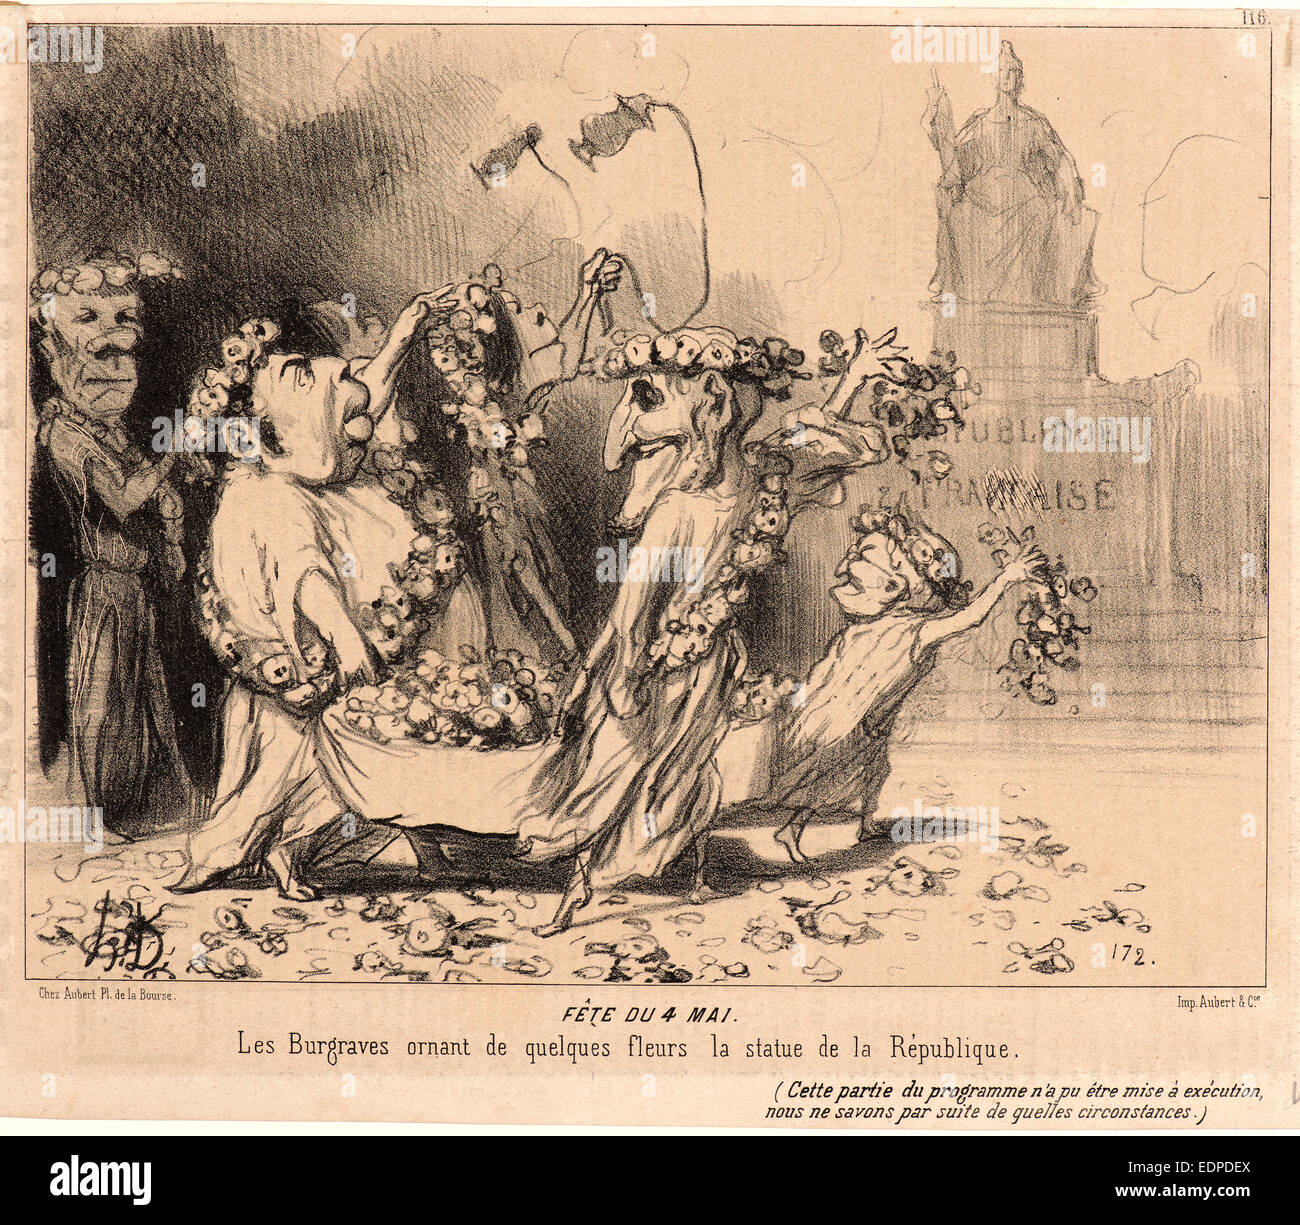 Honoré Daumier (French, 1808 - 1879). Fête du 4 Mai, 1850. From Actualités. Lithograph on wove newsprint paper Stock Photo